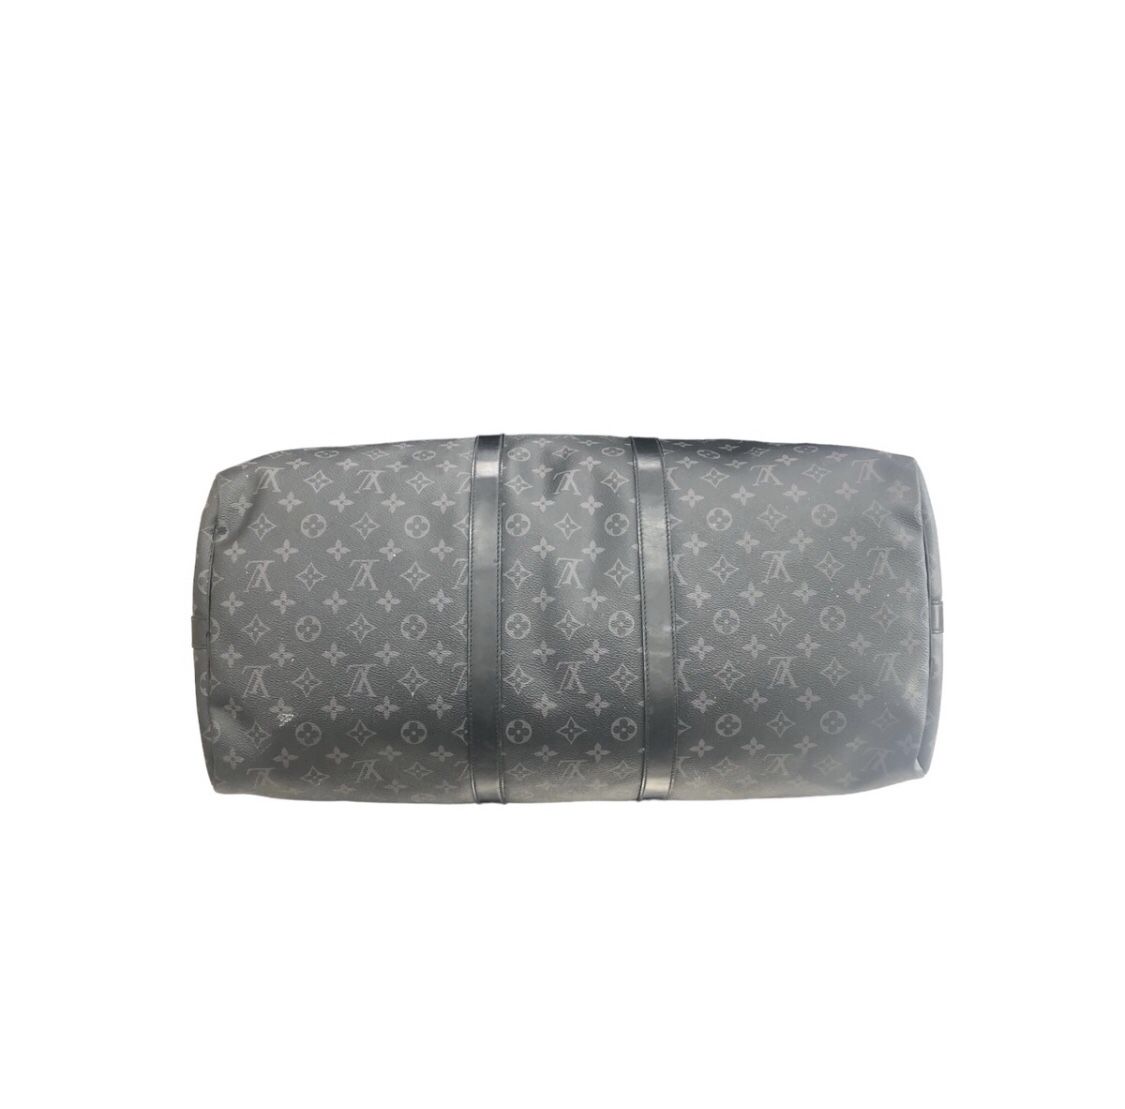 Louis Vuitton Messenger Bag for Sale in Las Vegas, NV - OfferUp